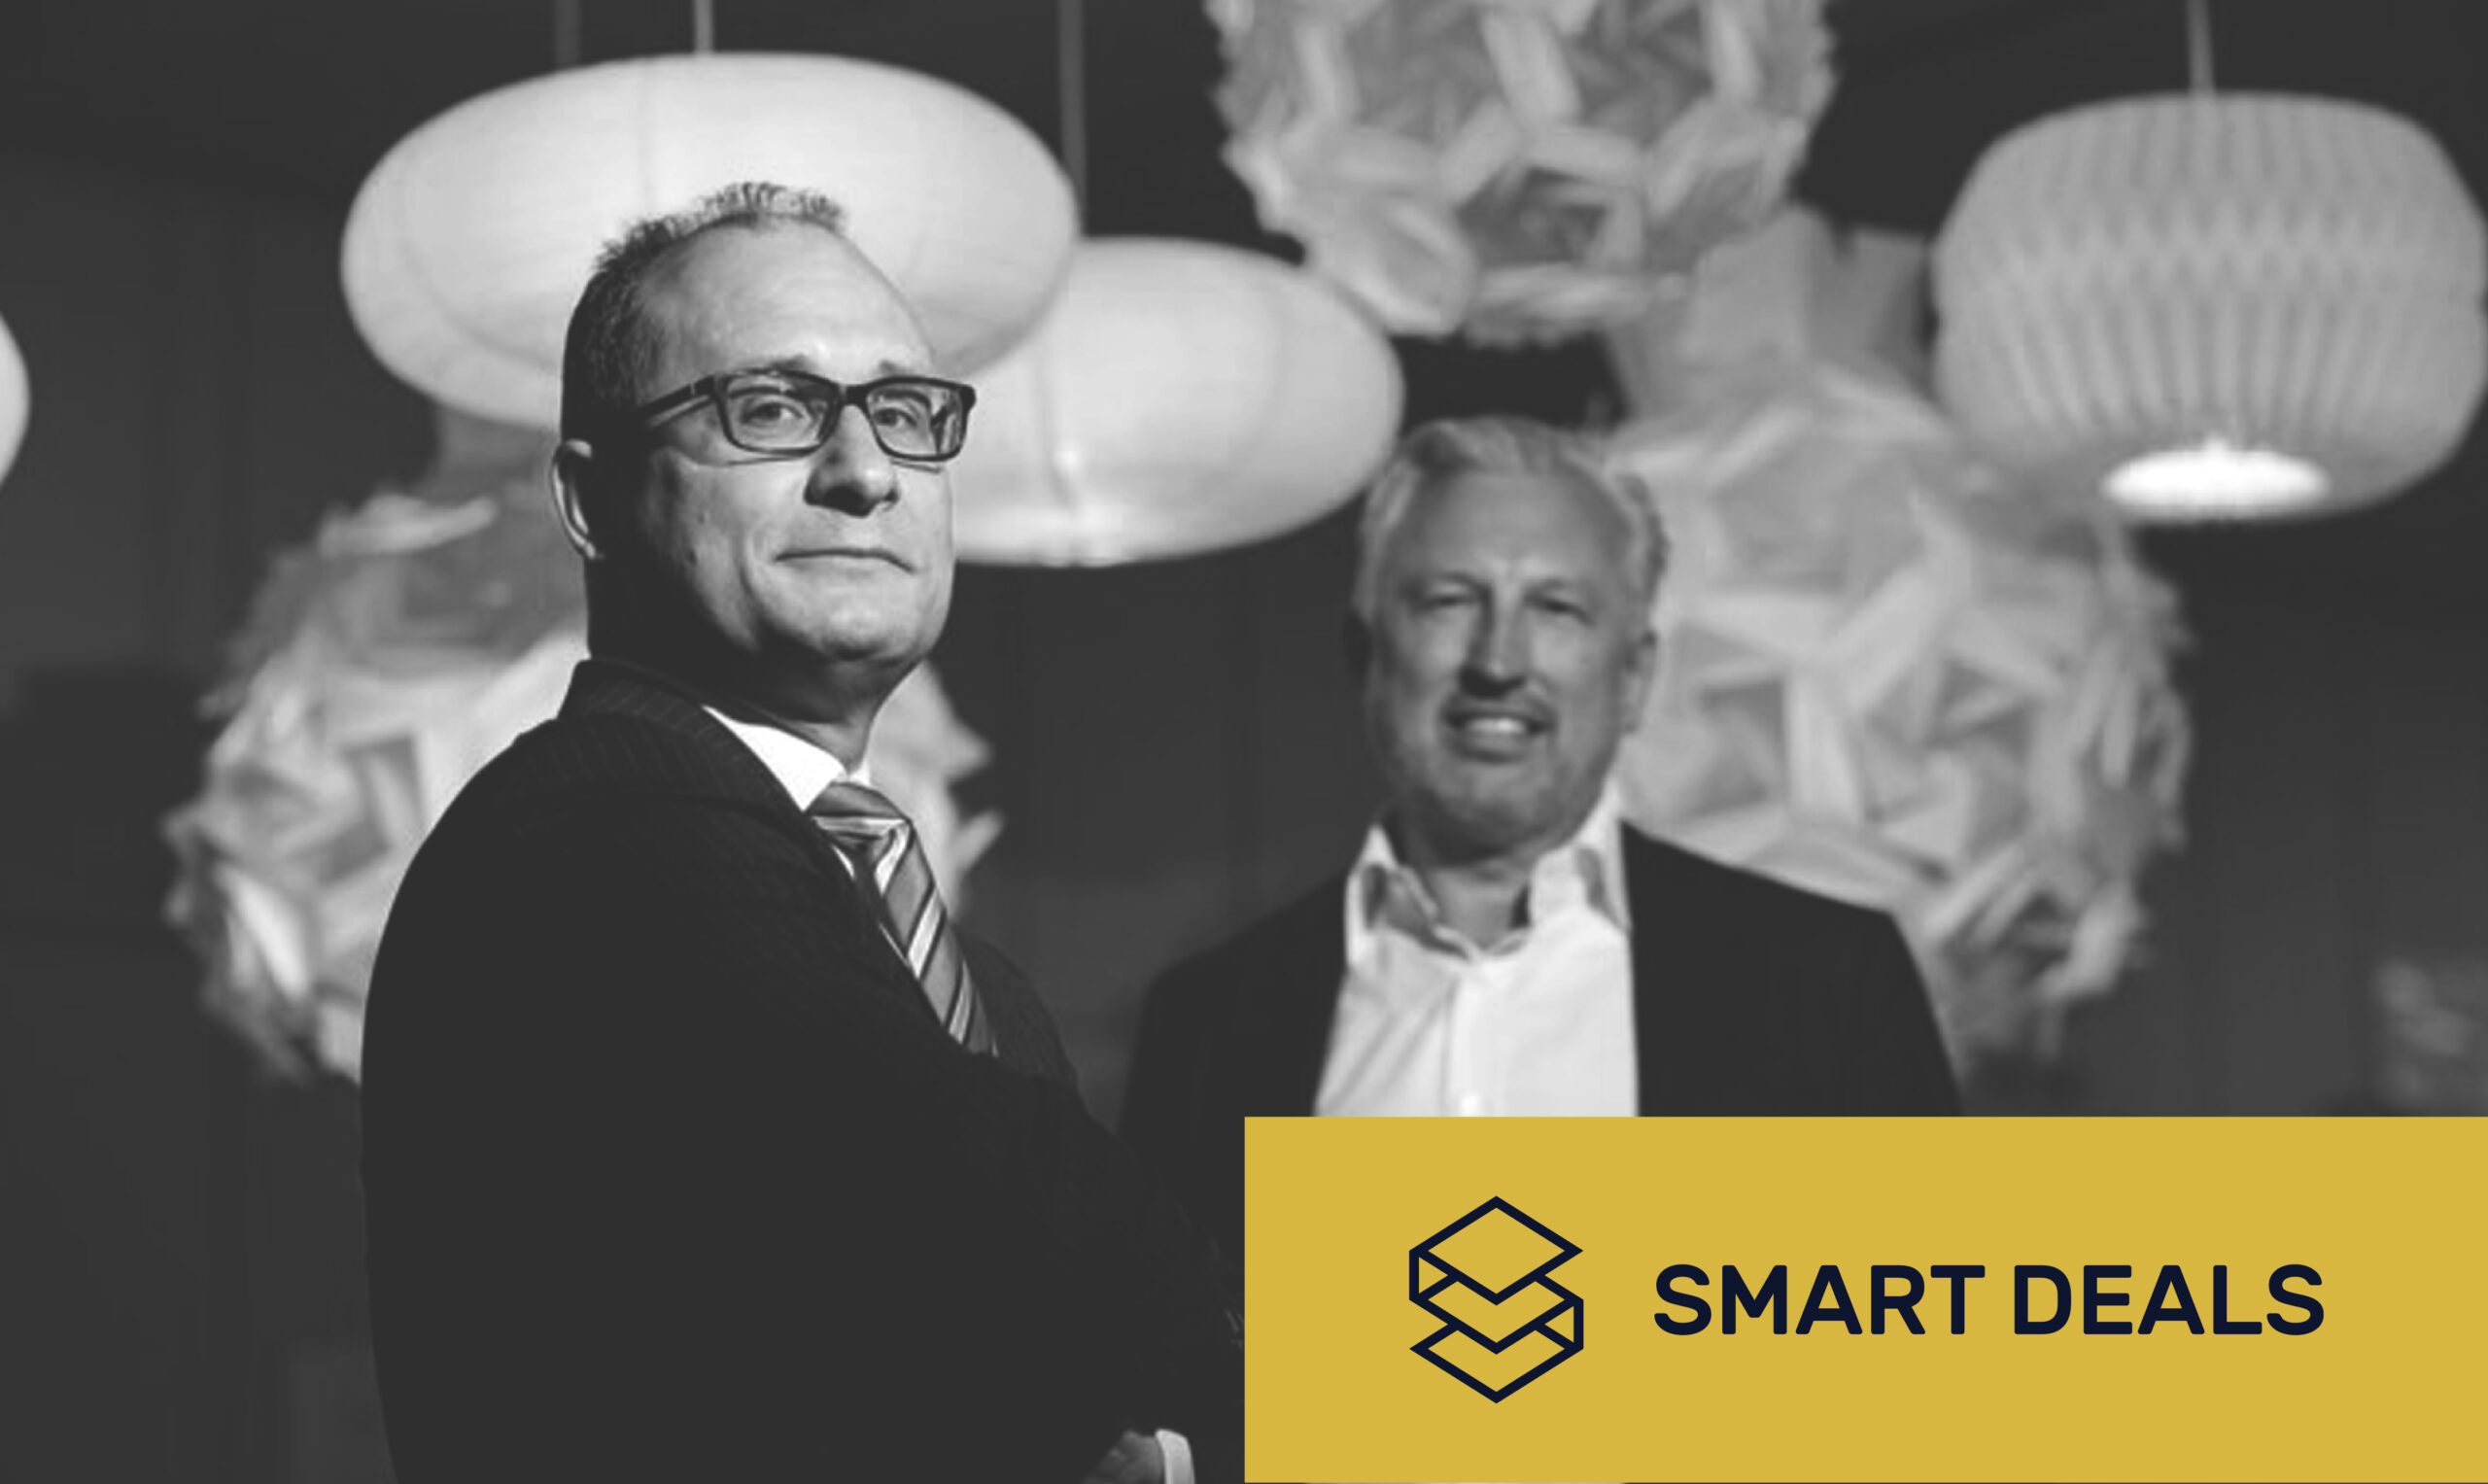 New partner Manfred Krcmar is the driving force behind Smart Deals